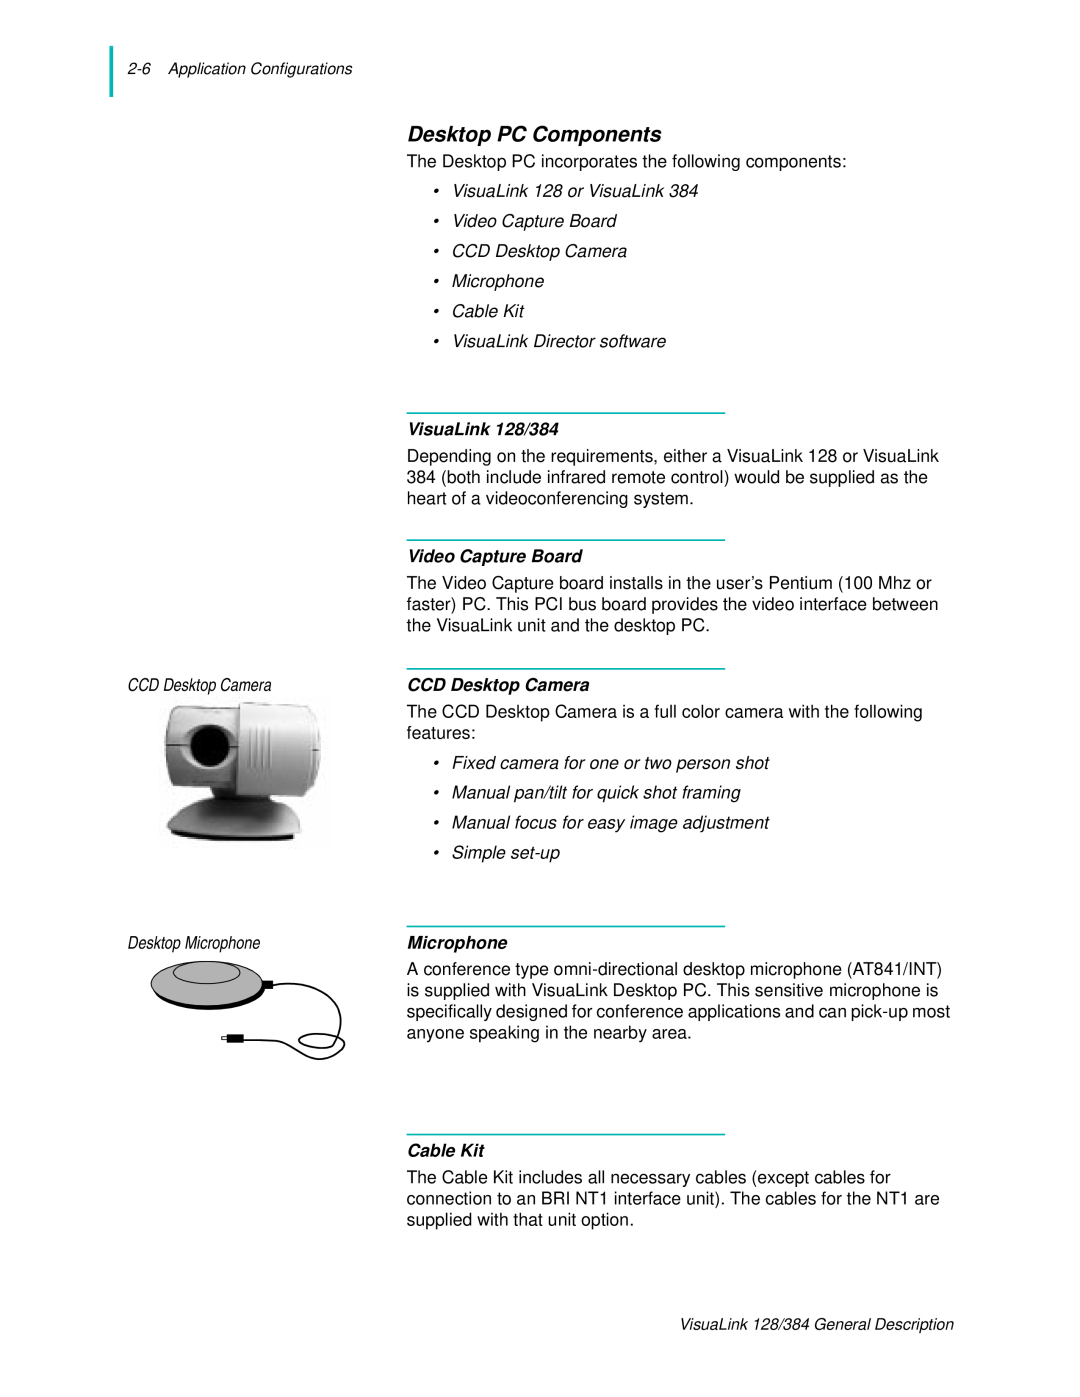 NEC manual Desktop PC Components, VisuaLink 128/384, Video Capture Board, CCD Desktop Camera, Microphone, Cable Kit 